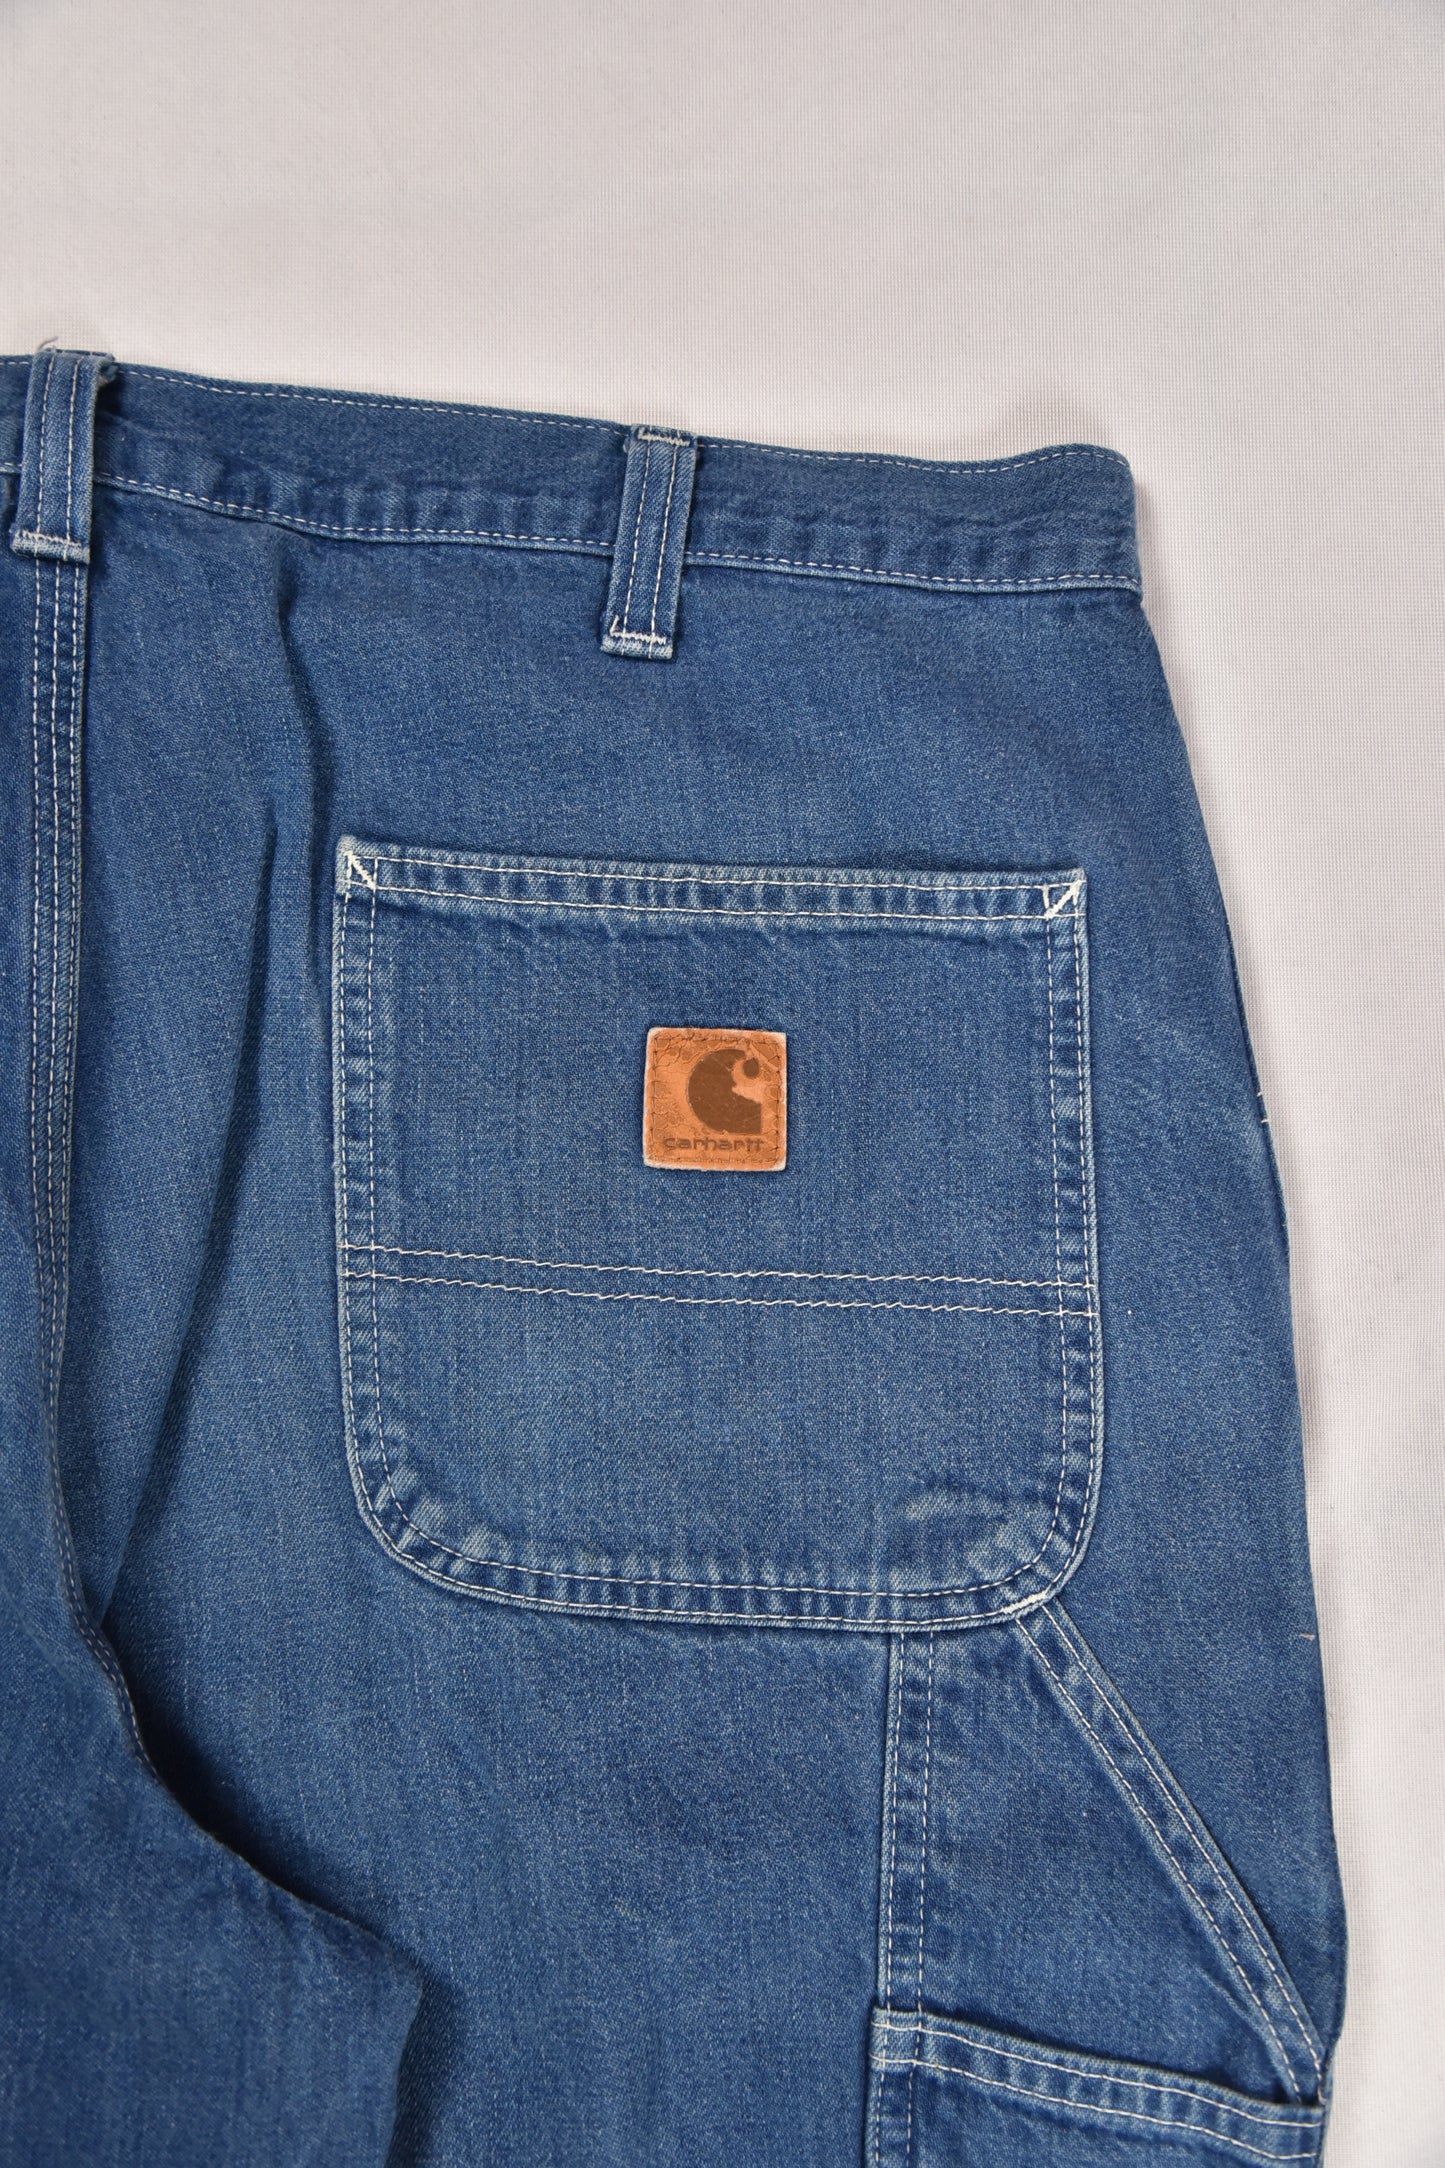 Jeans Carhartt Vintage / 36x30